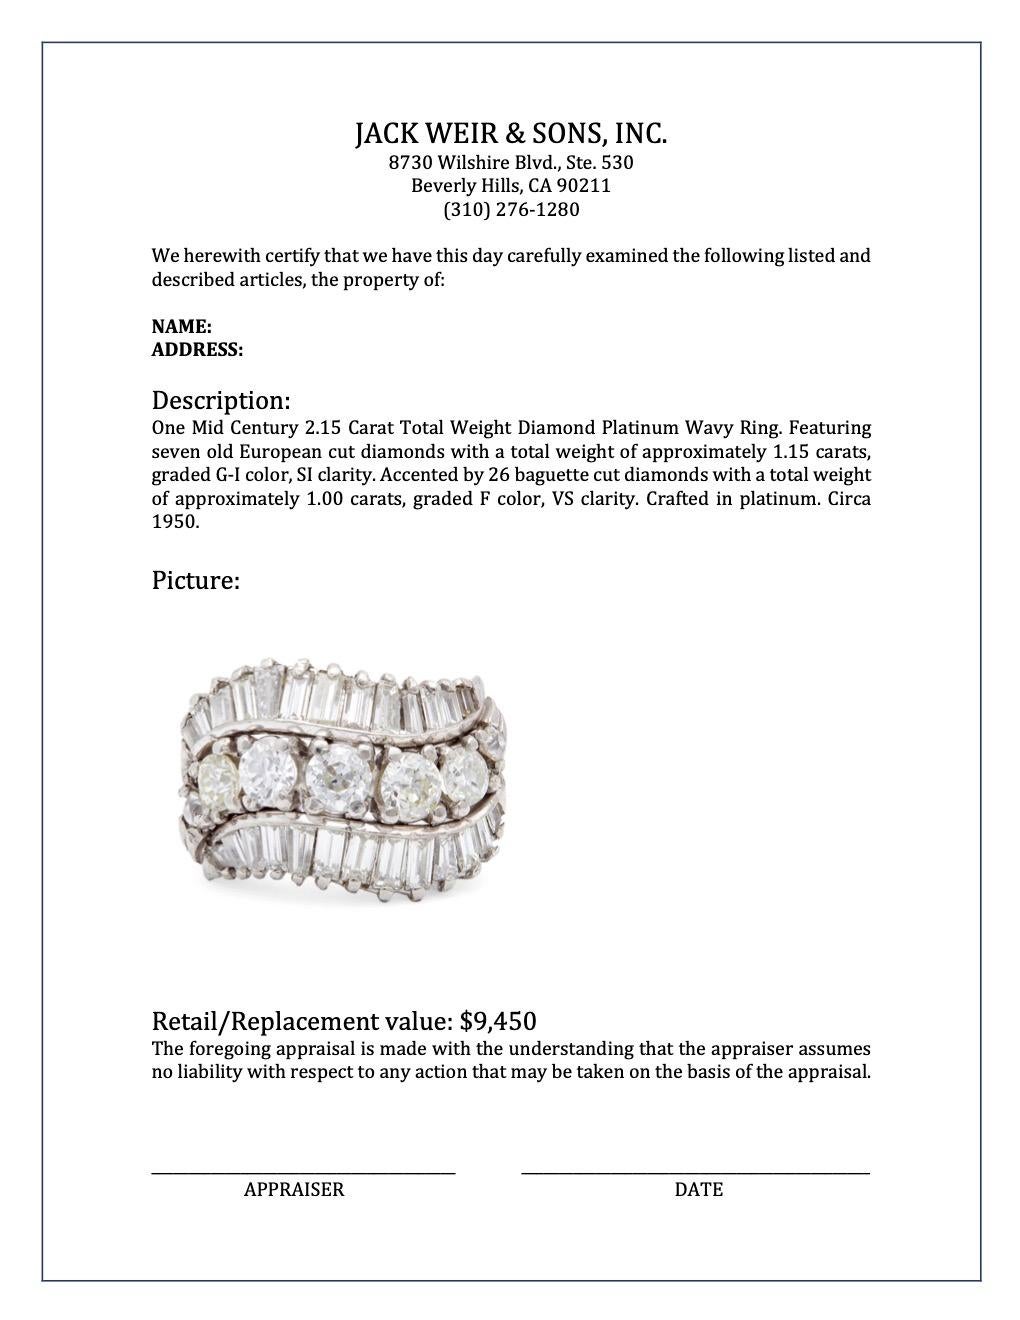 Midcentury 2.15 Carats Total Weight Diamond Platinum Wavy Ring 2